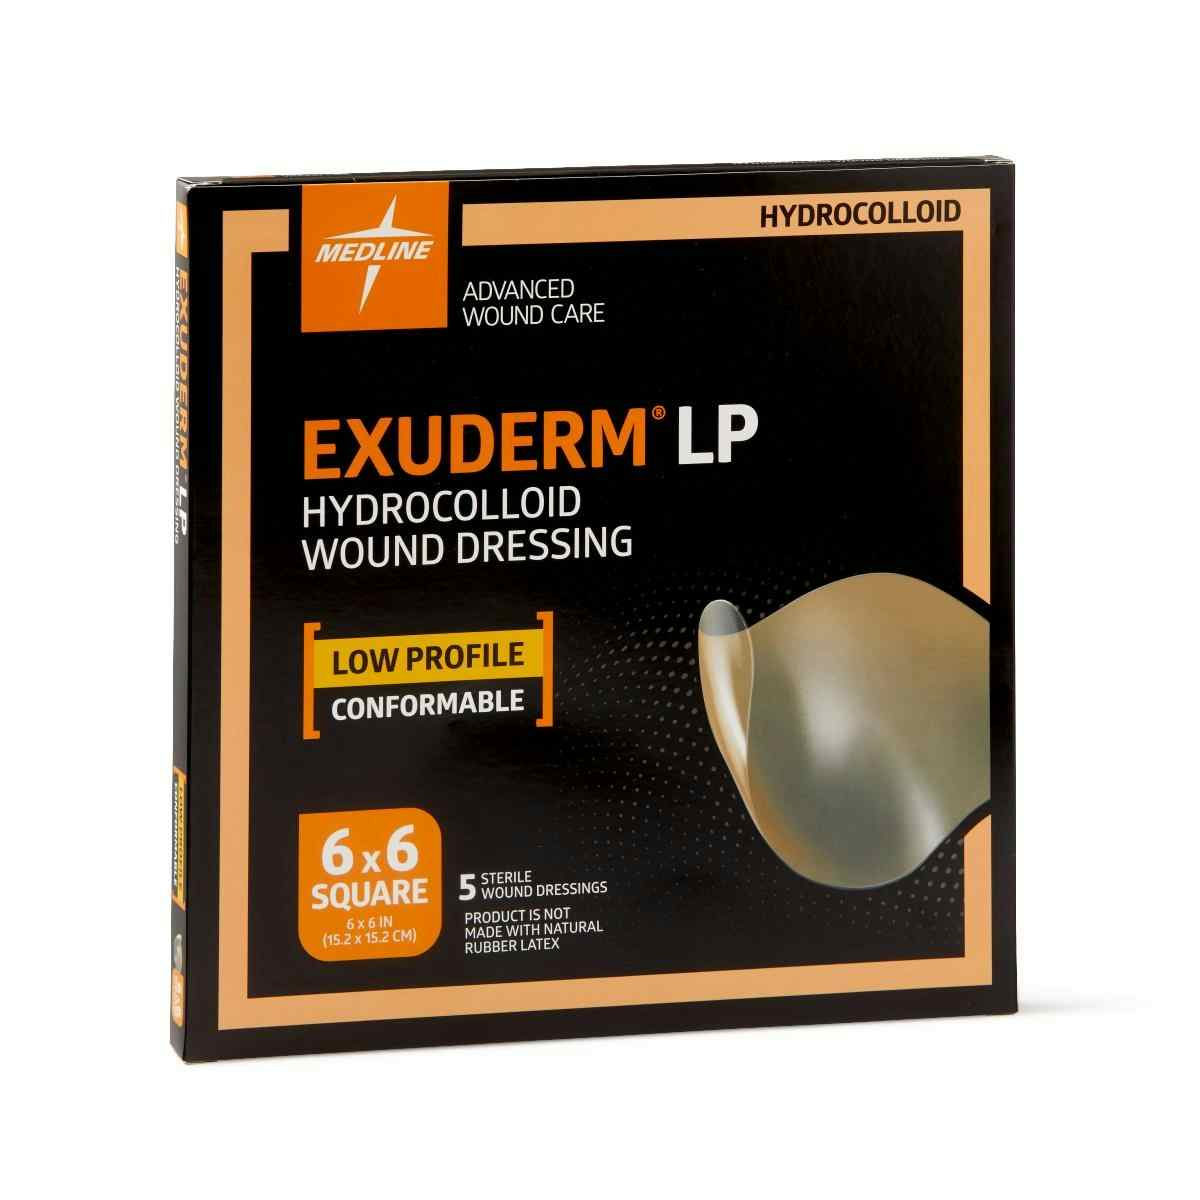 Exuderm LP Hydrocolloid Wound Dressing, MSC5125, 6" X 6" - Box of 5 